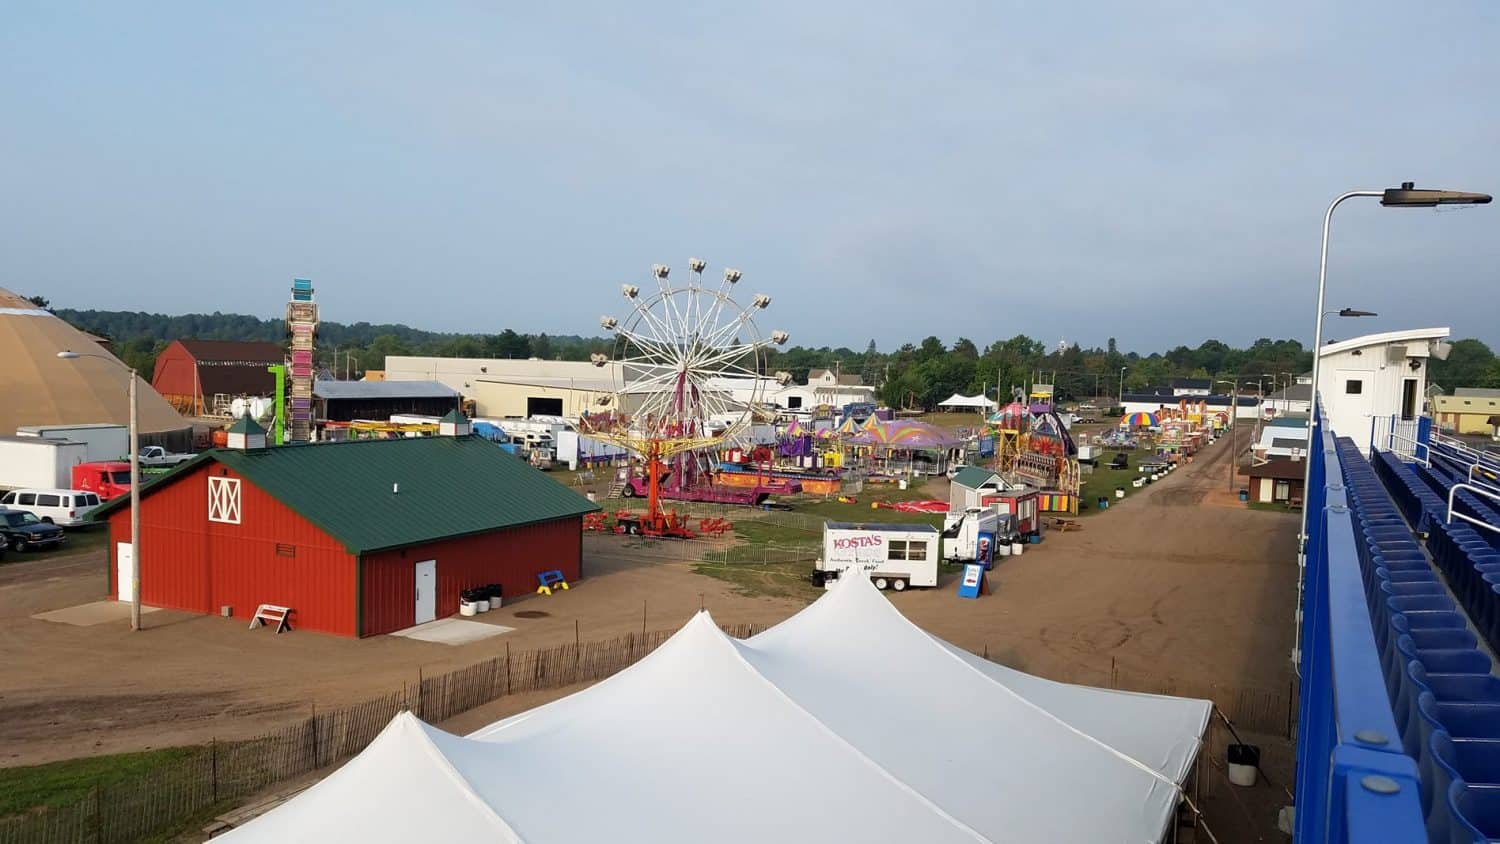 2020 Lincoln County Fair cancelled